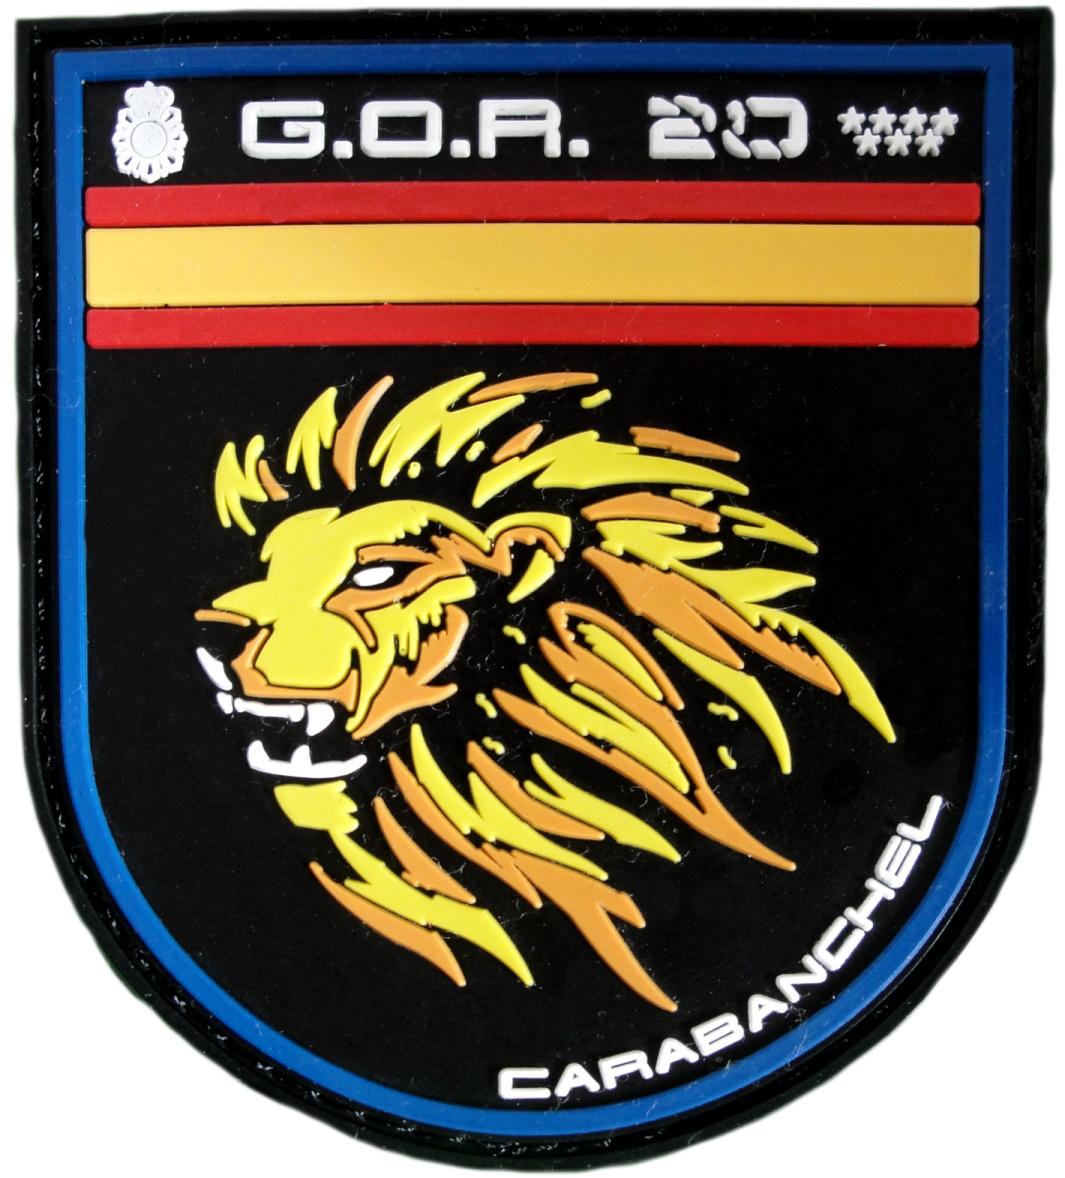 Policía Nacional CNP Grupo Operativo de Respuesta GOR 20 Carabanchel noches parche insignia emblema distintivo